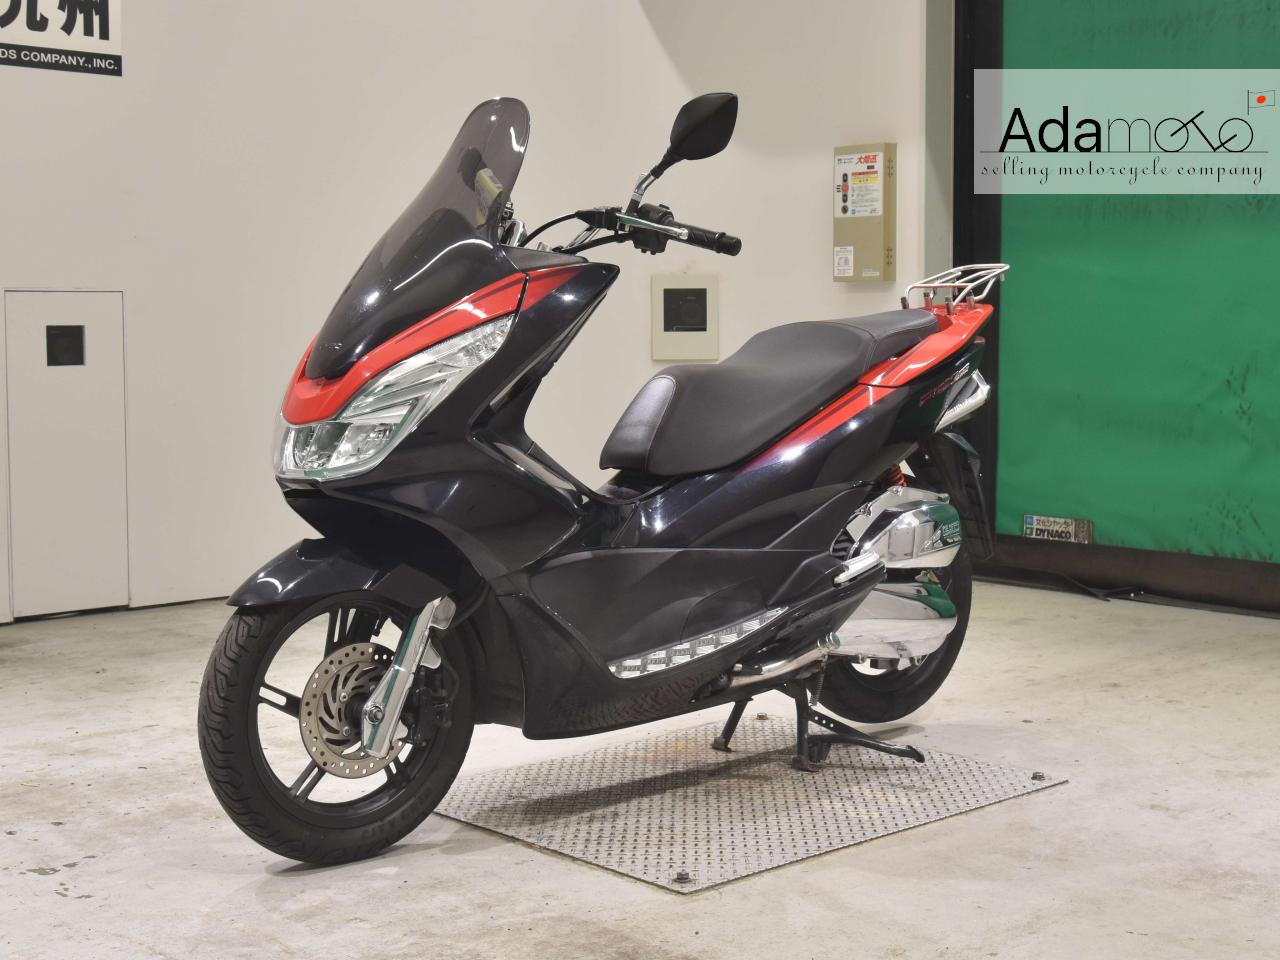 Honda PCX150 2 - Adamoto - Motorcycles from Japan